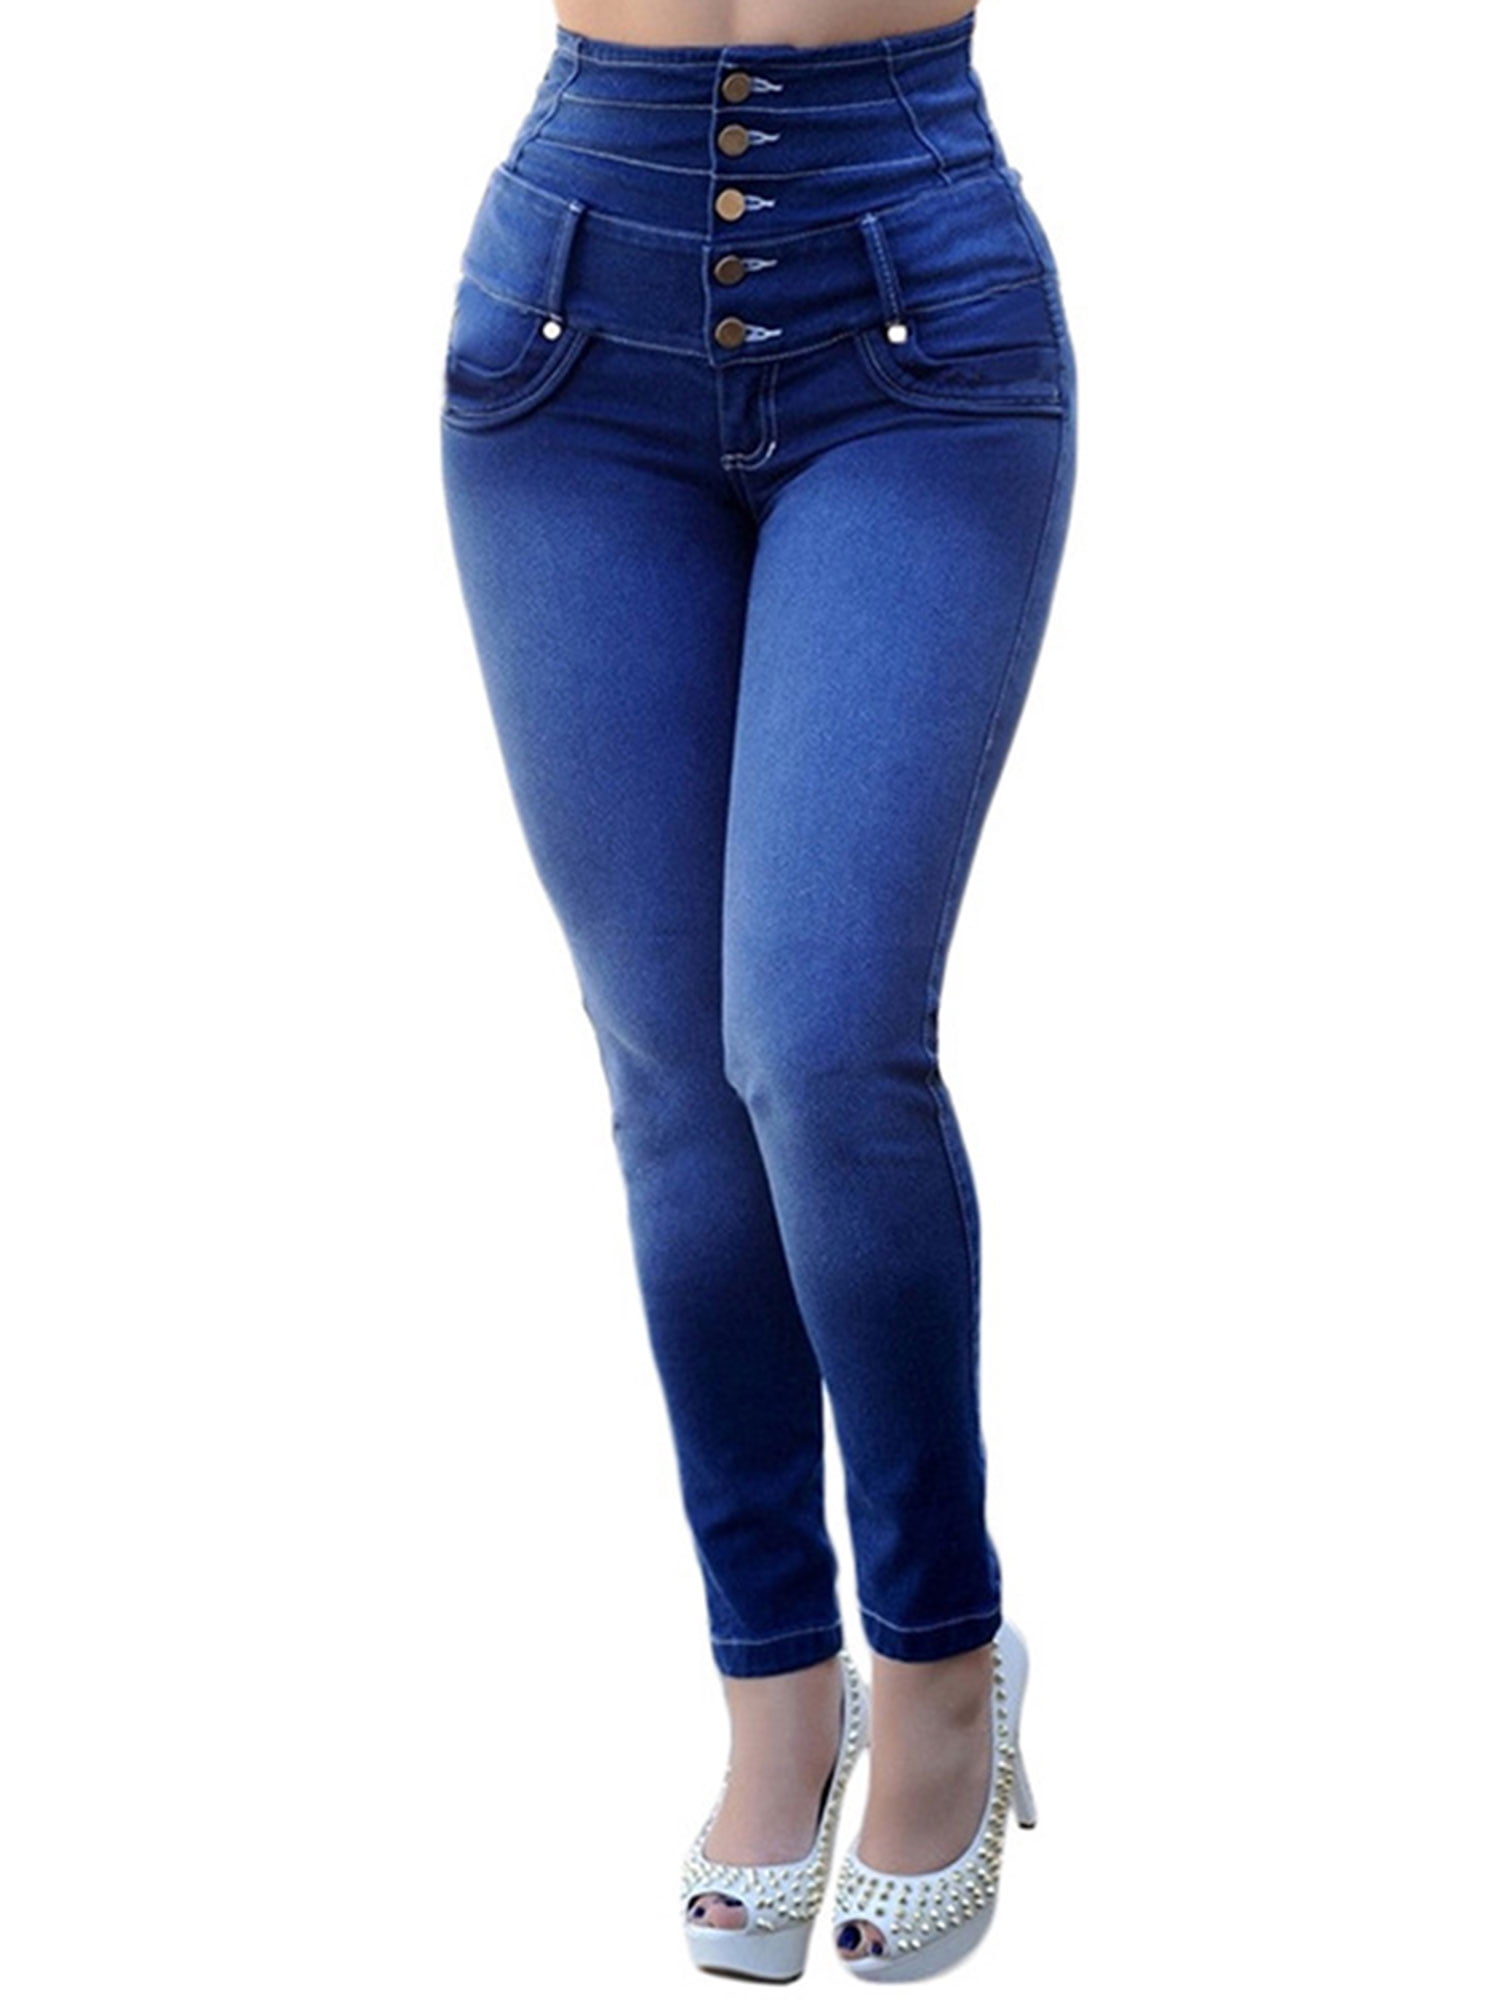 SELX Women Stretch High Rise Butt Lift Skinny Pencil Pants Trousers Jeans Denim Pants 